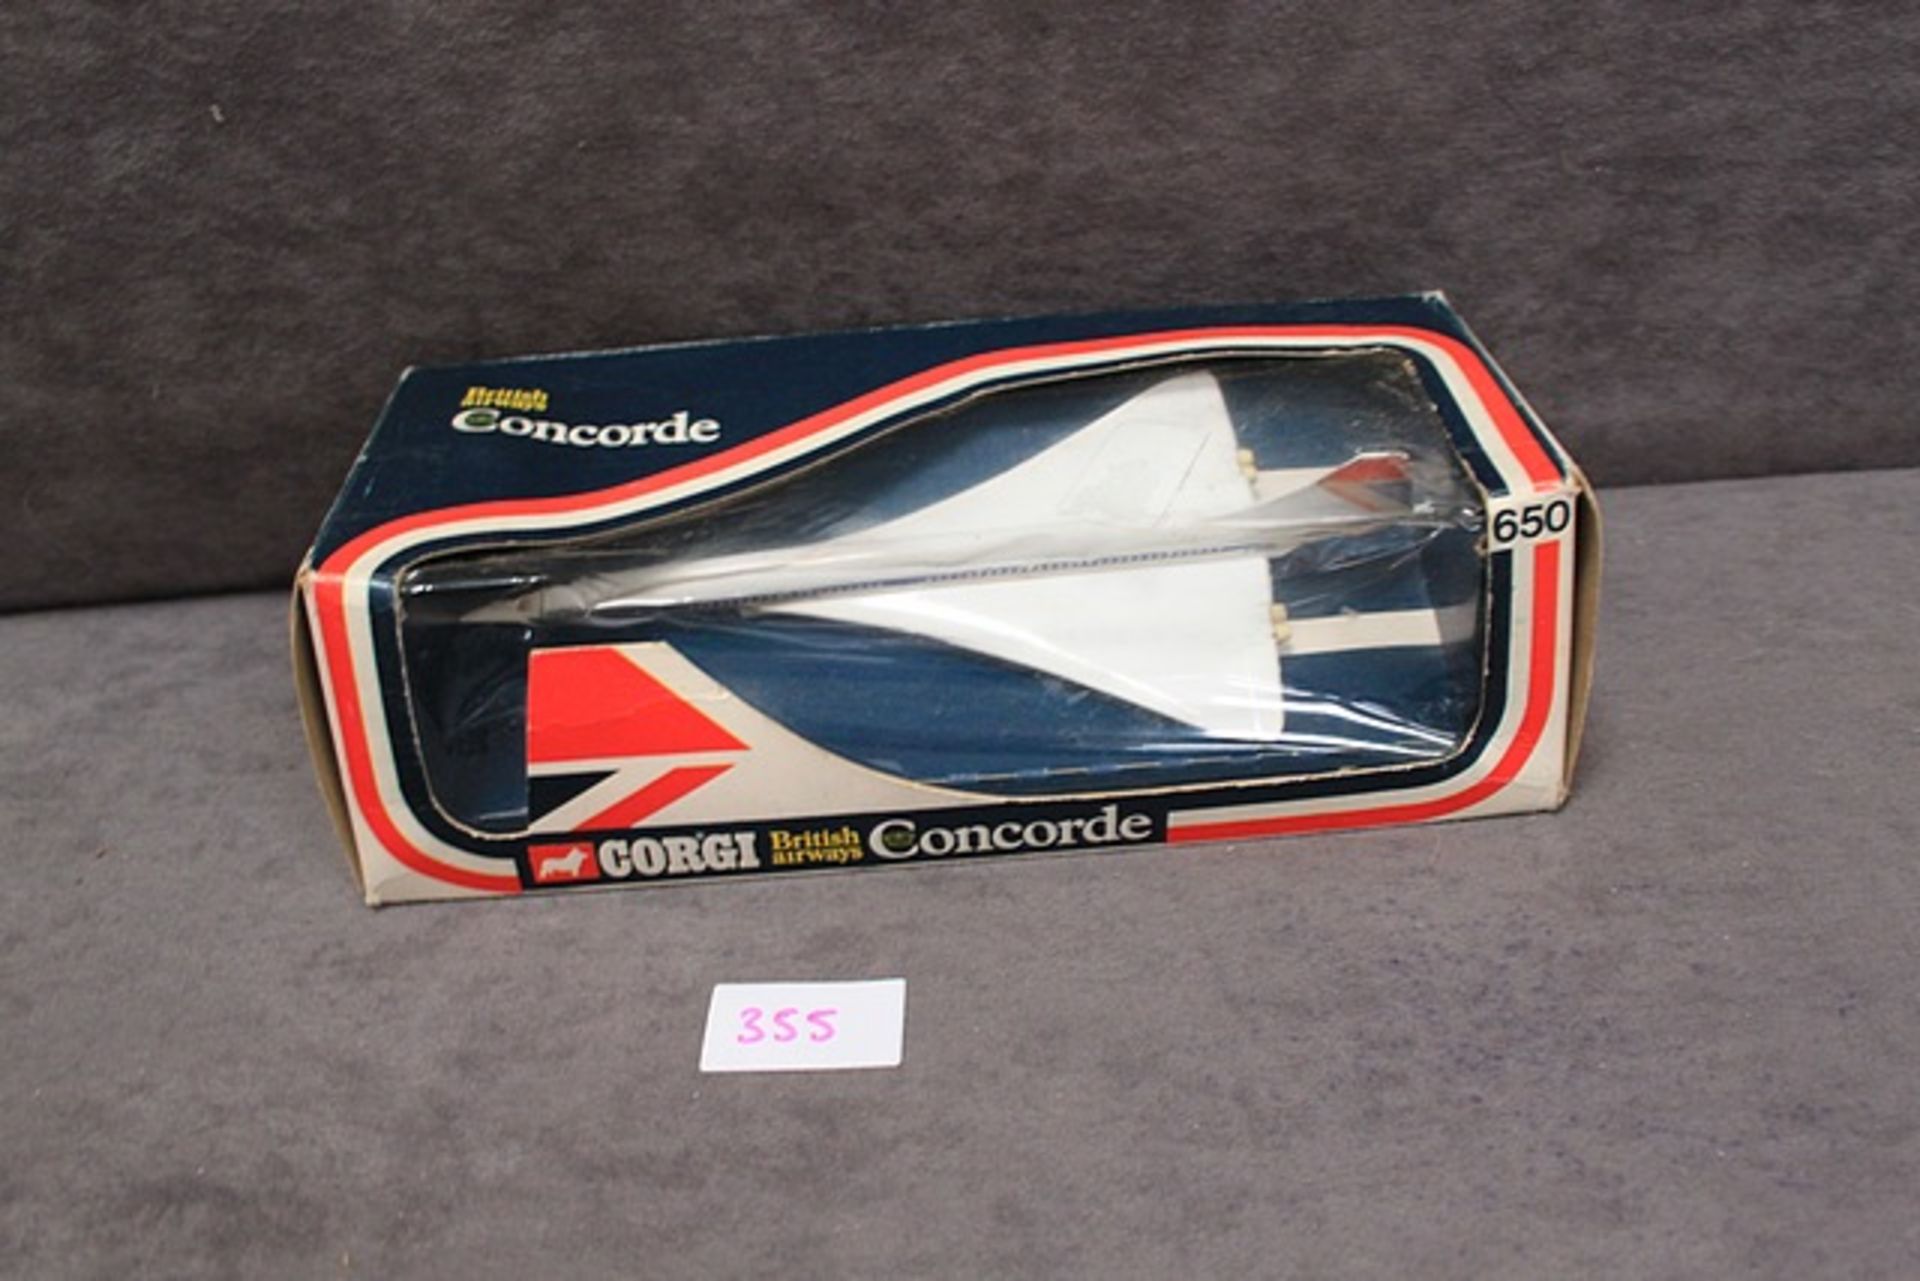 Rarer version Mint Corgi Diecast #650 British Airways Concord in box (GBBDG on tail) with slight box - Image 2 of 2